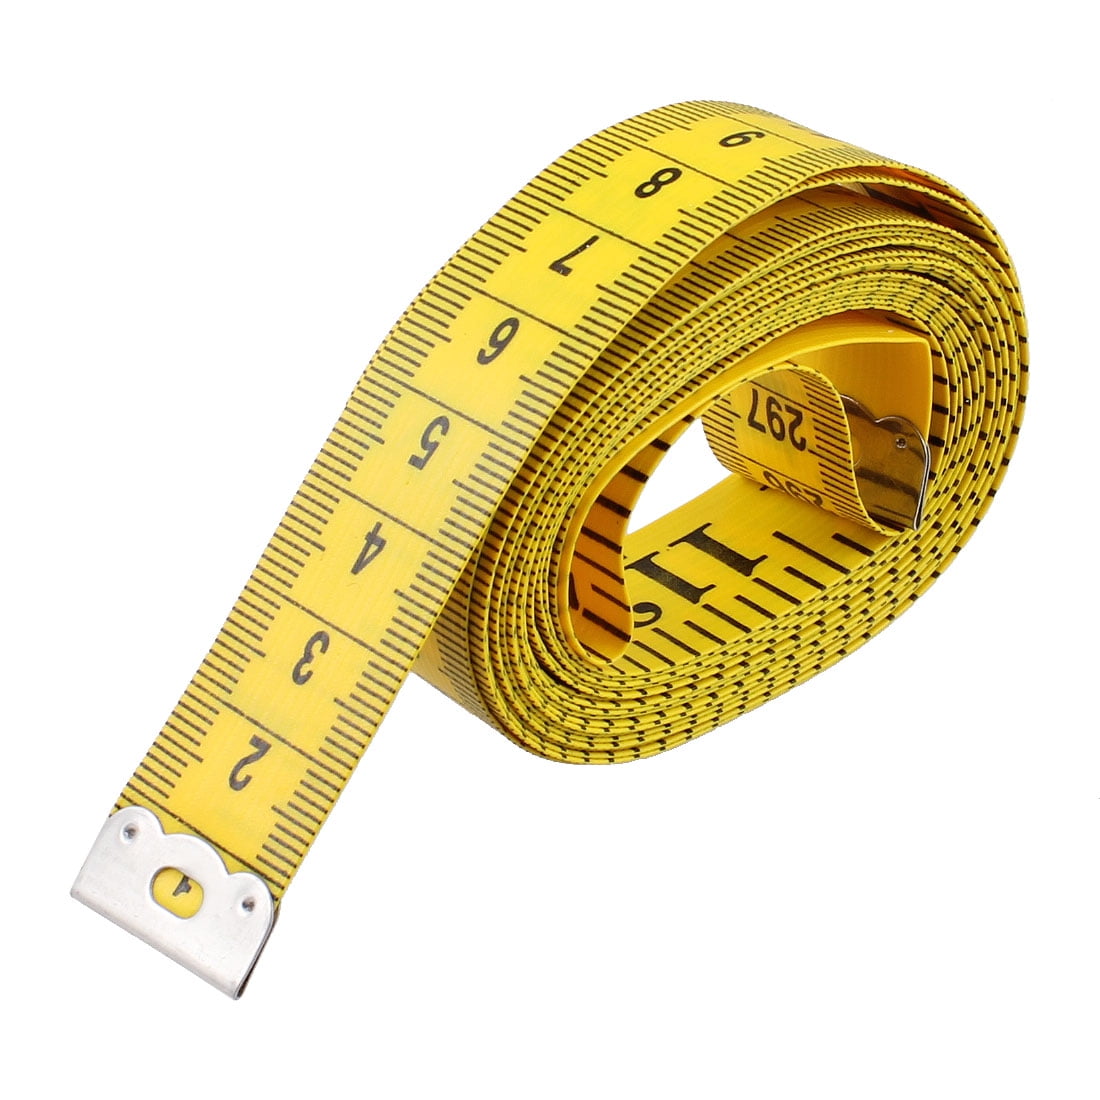 1X Tape Measure 120-Inch Soft Tape Measure Sewing Tailor Flat Tape Body Measuring Measure Ruler Dressmaking Layout Tool Adorable Quality and DurableDauerhaft Nützlich und praktisch Nettes Design